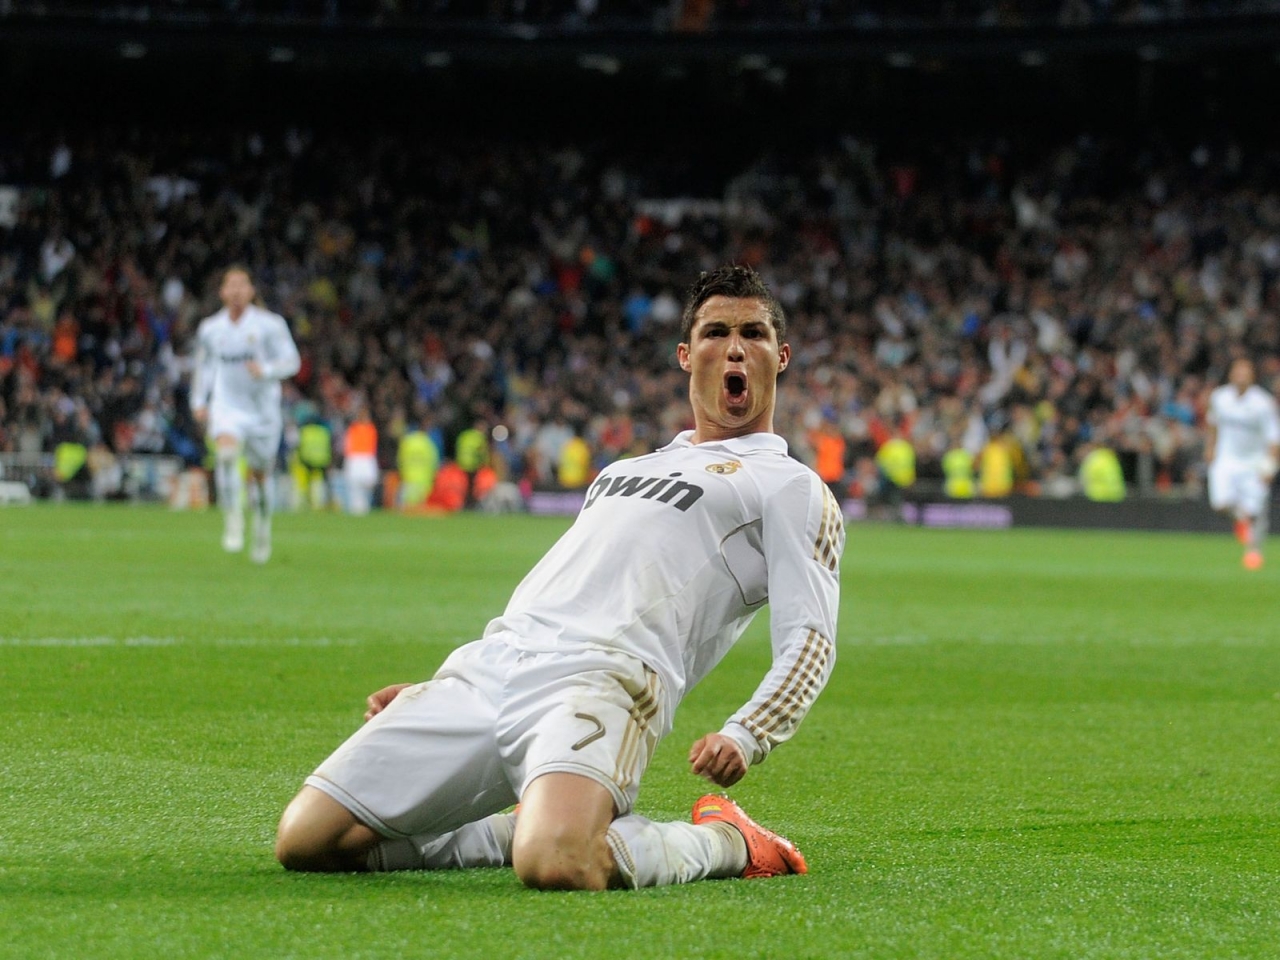 Cristiano Ronaldo Celebrating for 1280 x 960 resolution